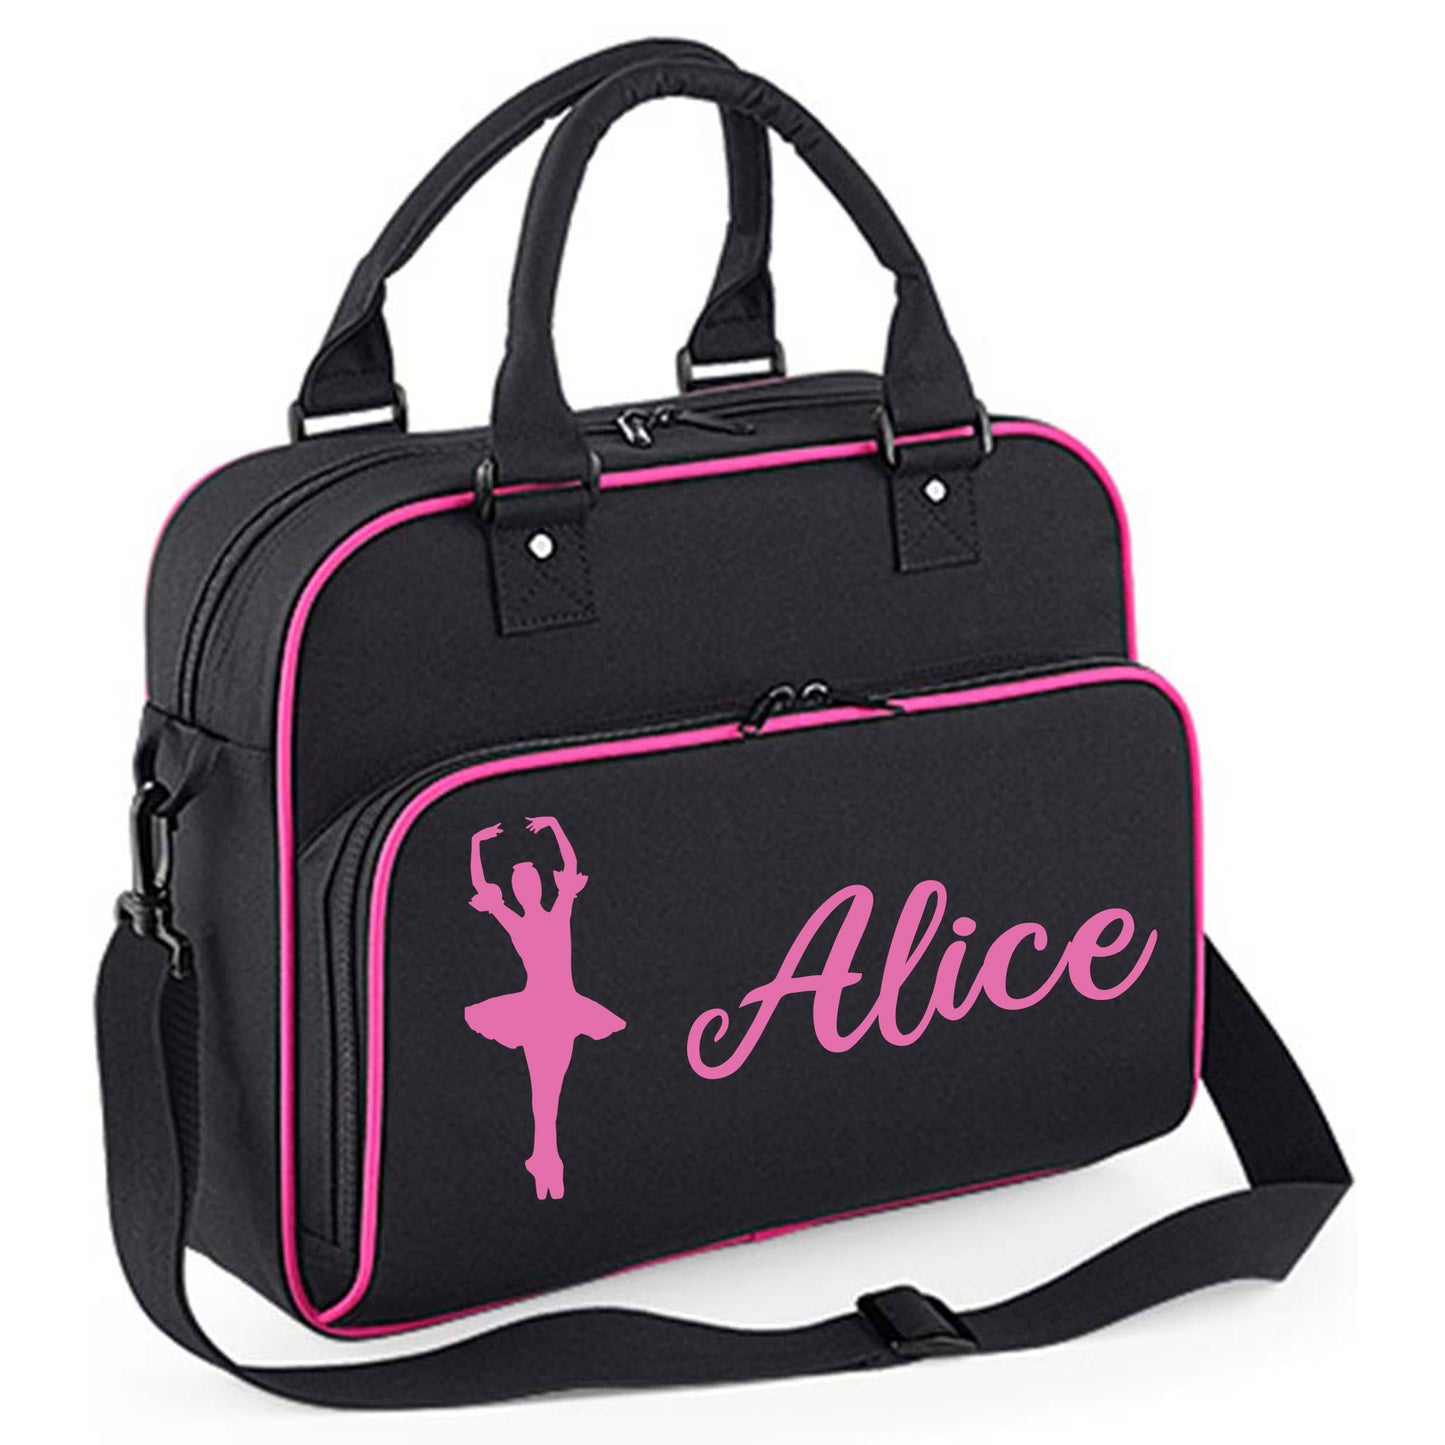 Personalised Dance Bag Kids | Girls Children's Ballet School Bag  - Always Looking Good - Black with Pink Piping Ballet Dancer 